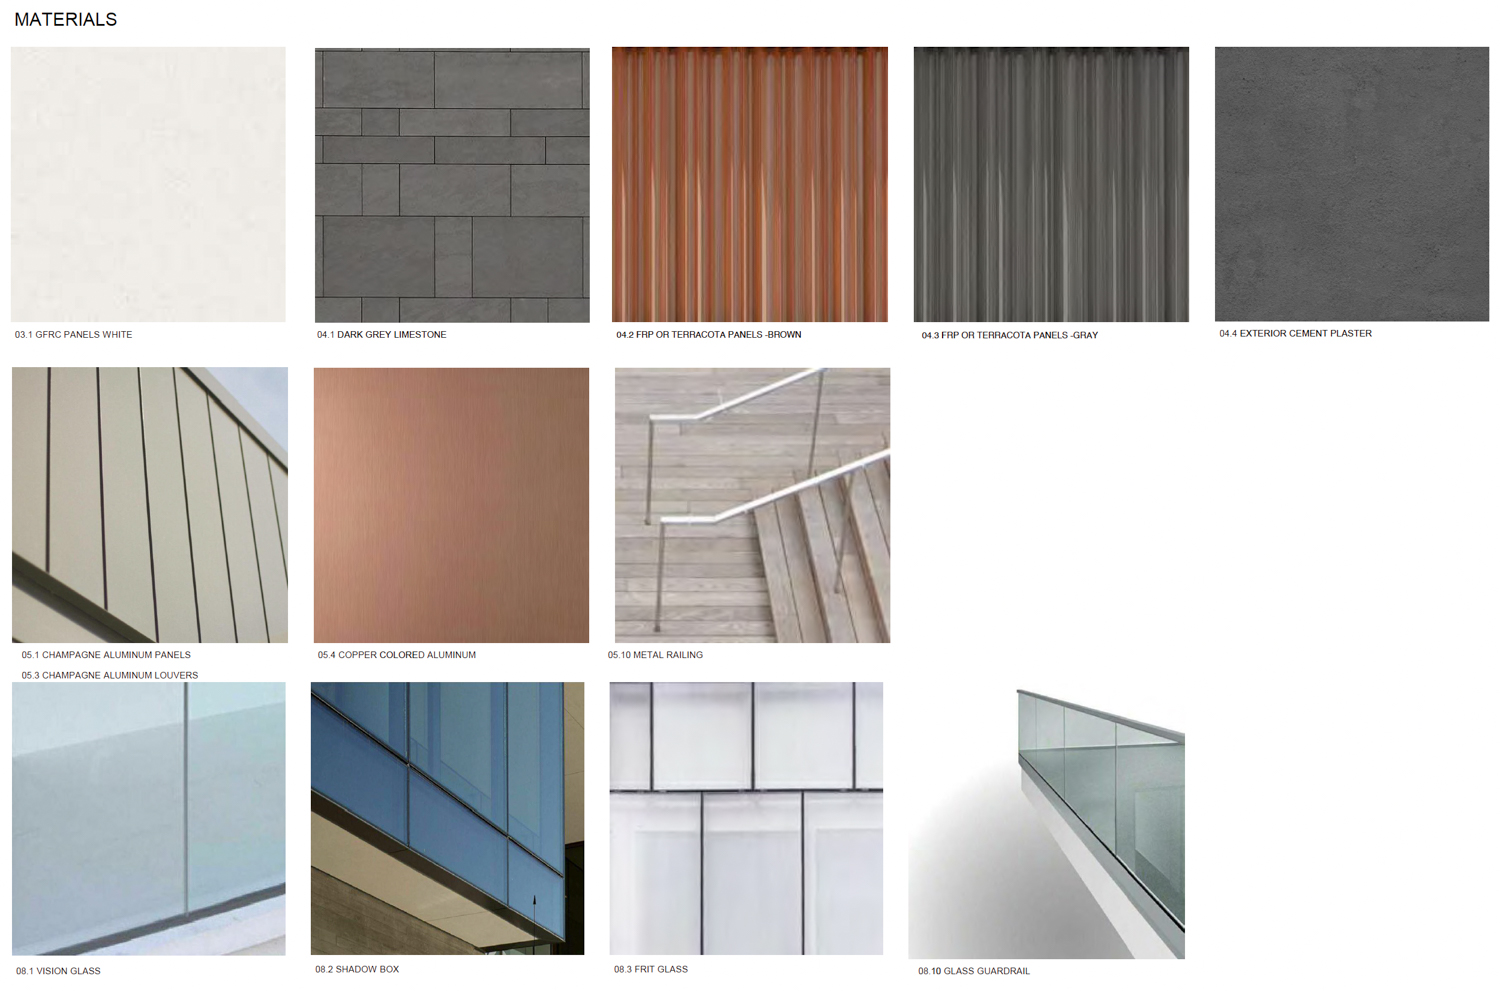 ACLS Millbrae Campus facade material list, rendering by WRNS Studio